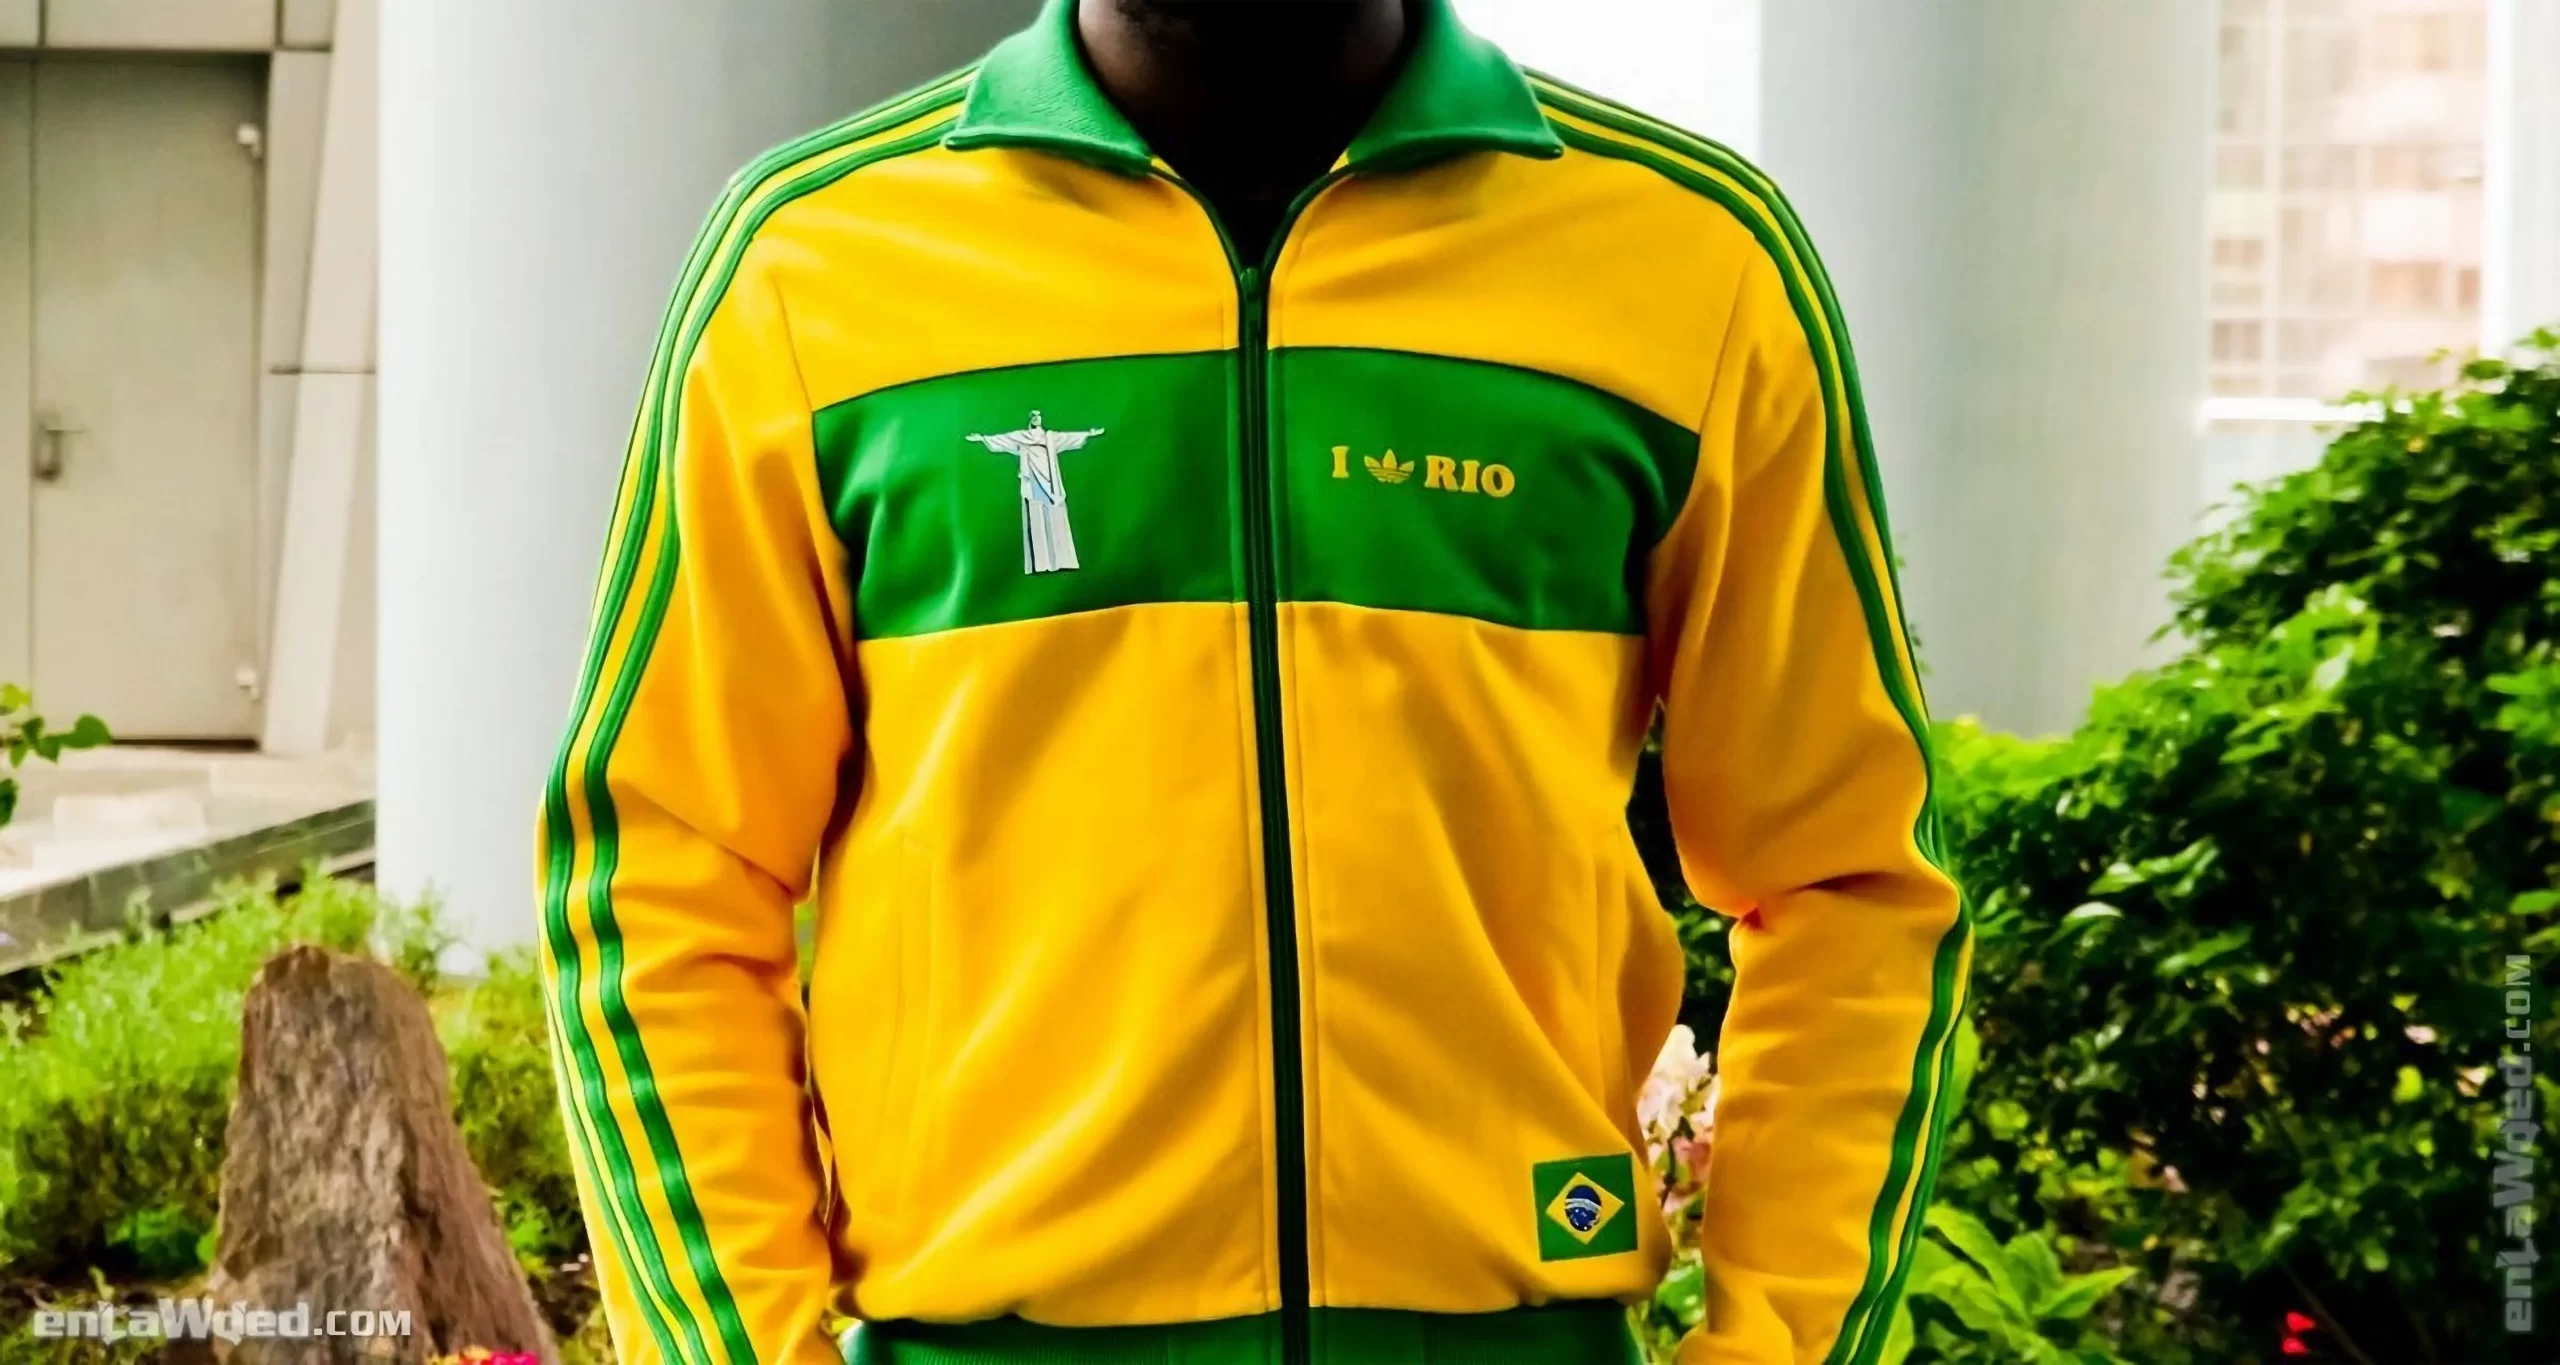 Men’s 2006 Rio de Janeiro TT-Two by Adidas Originals: Tremendous (EnLawded.com file #lmchk90426ip2y122321kg9st)